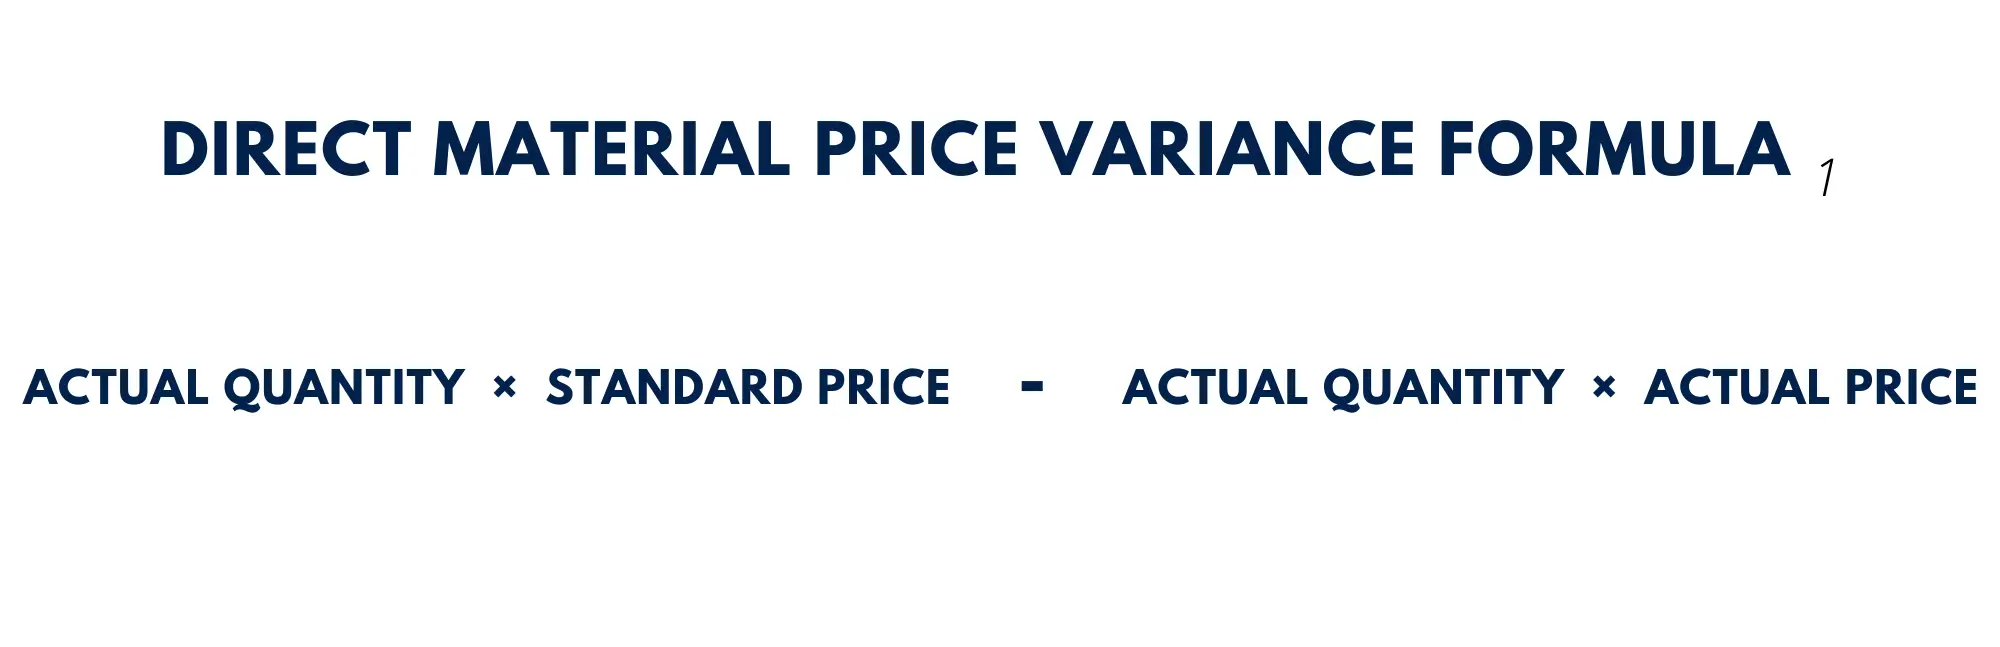 Direct Material Price Variance = Actual Quantity × Standard Price - Actual Quantity × Actual Price